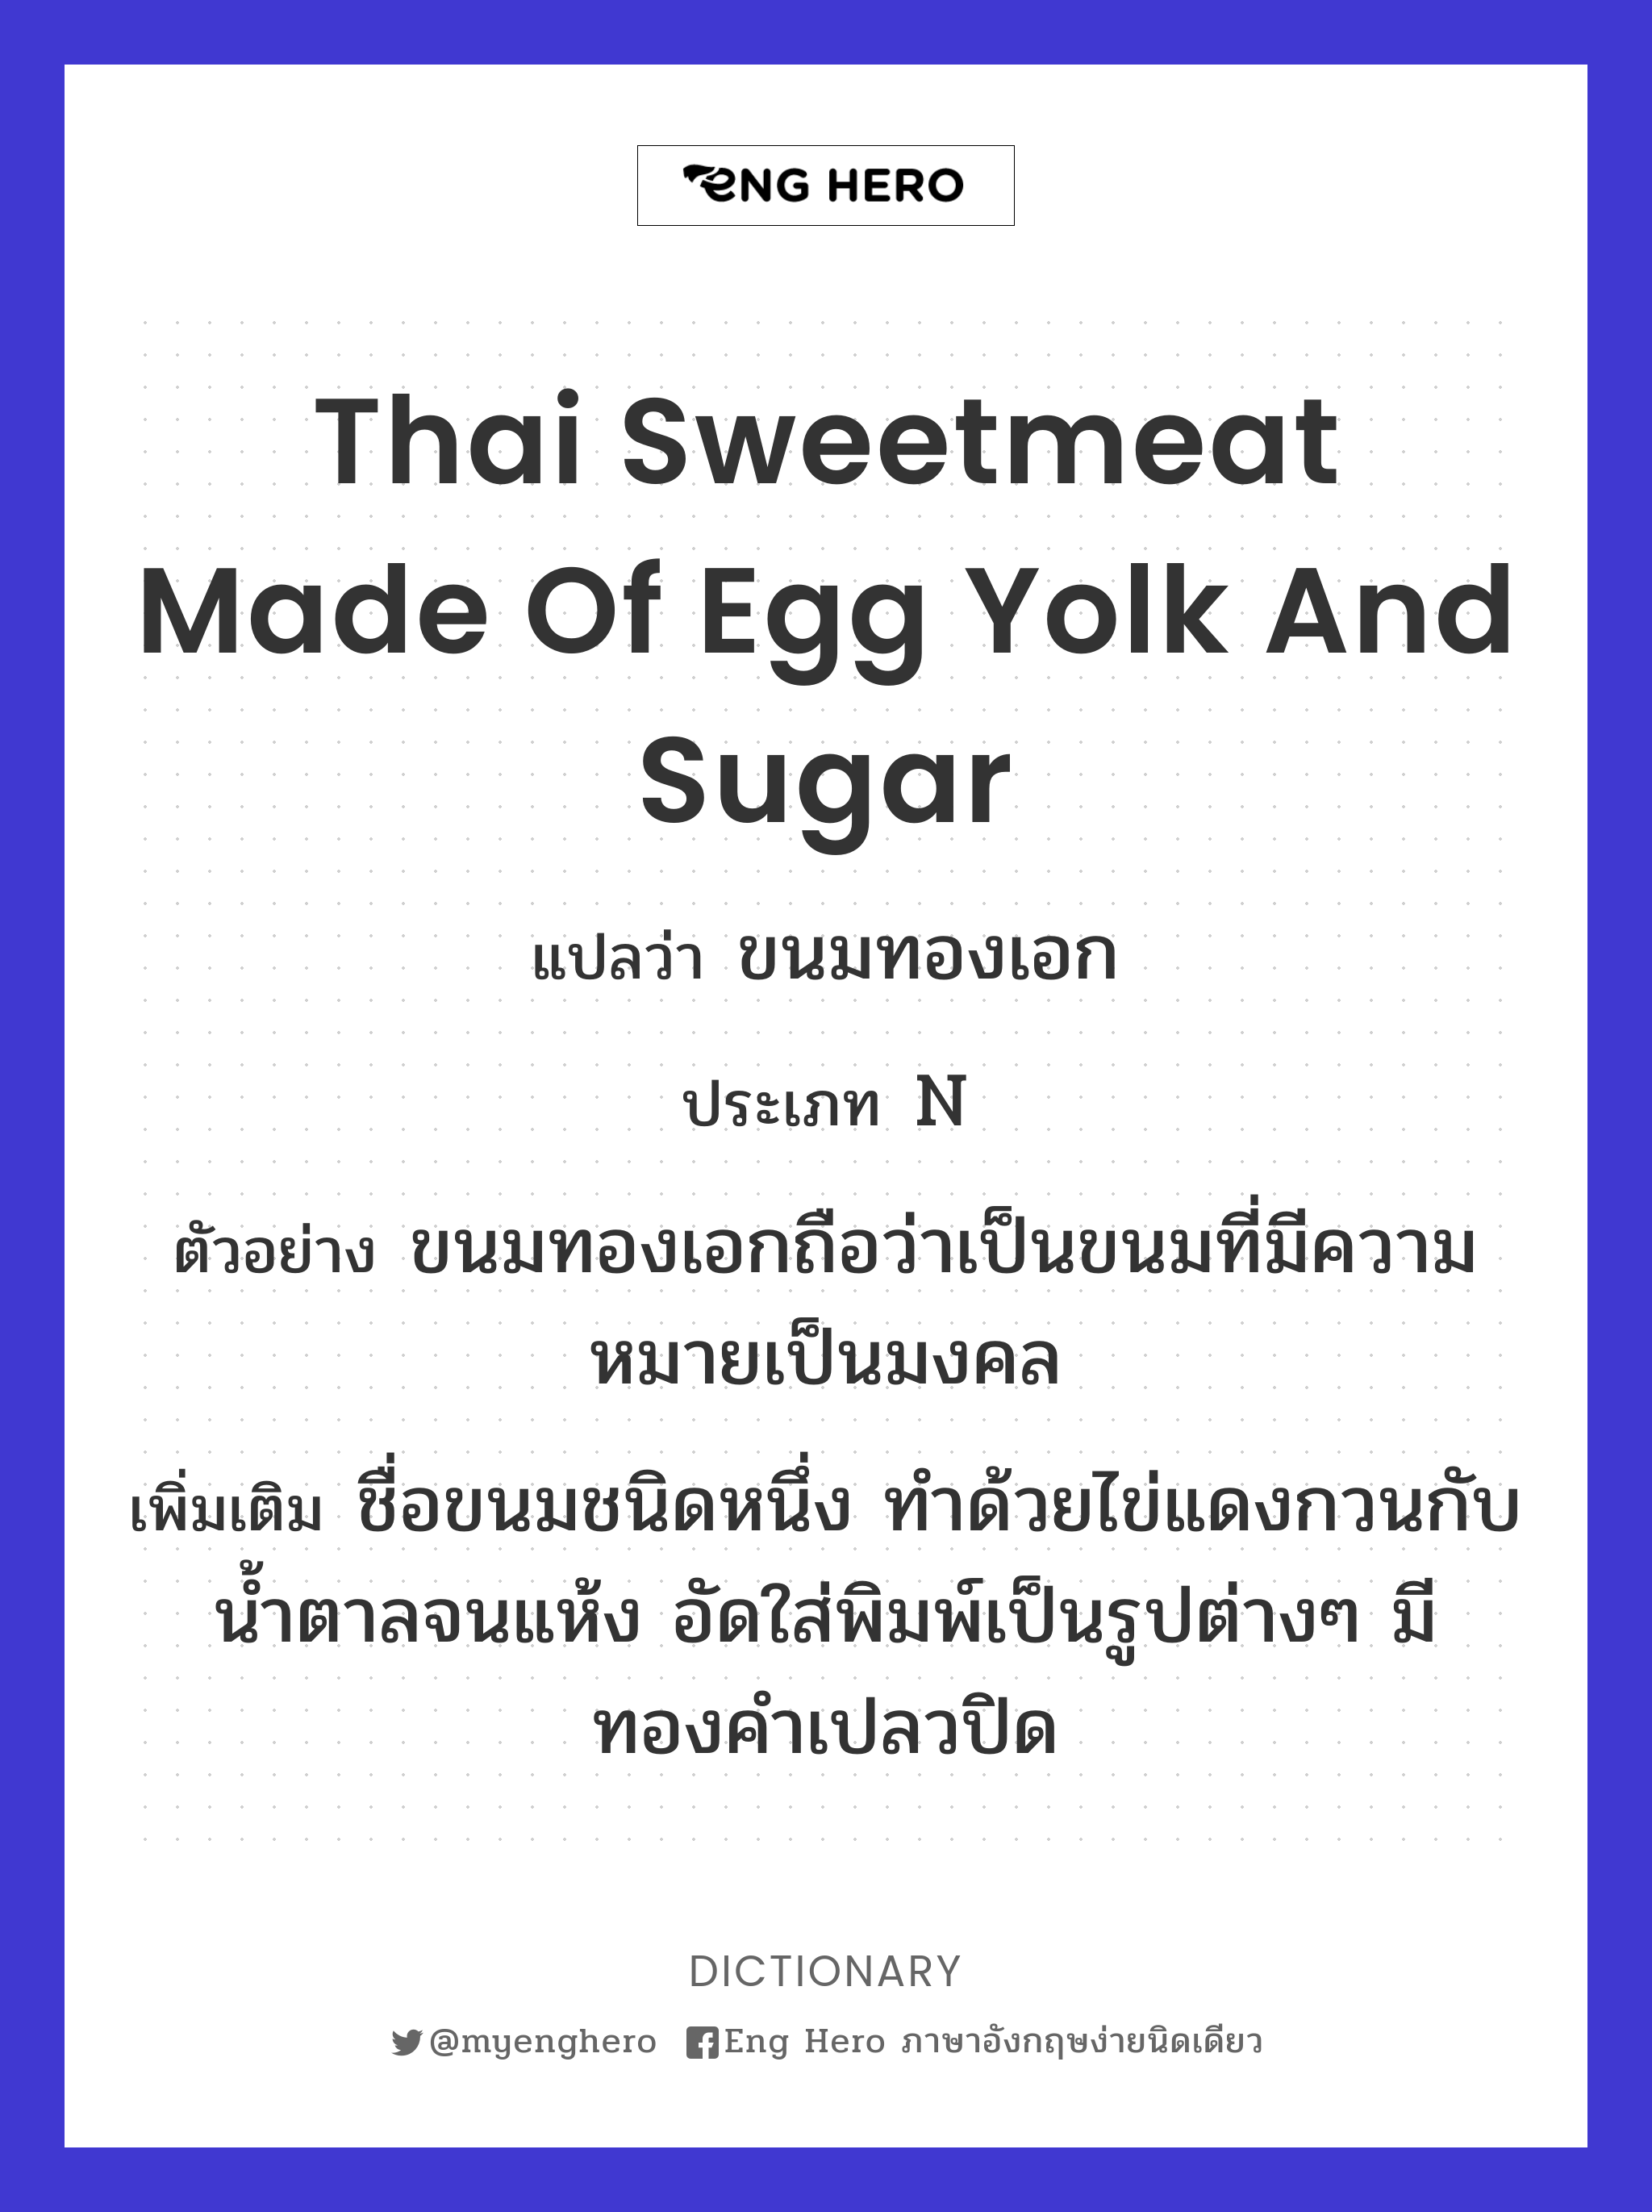 Thai sweetmeat made of egg yolk and sugar